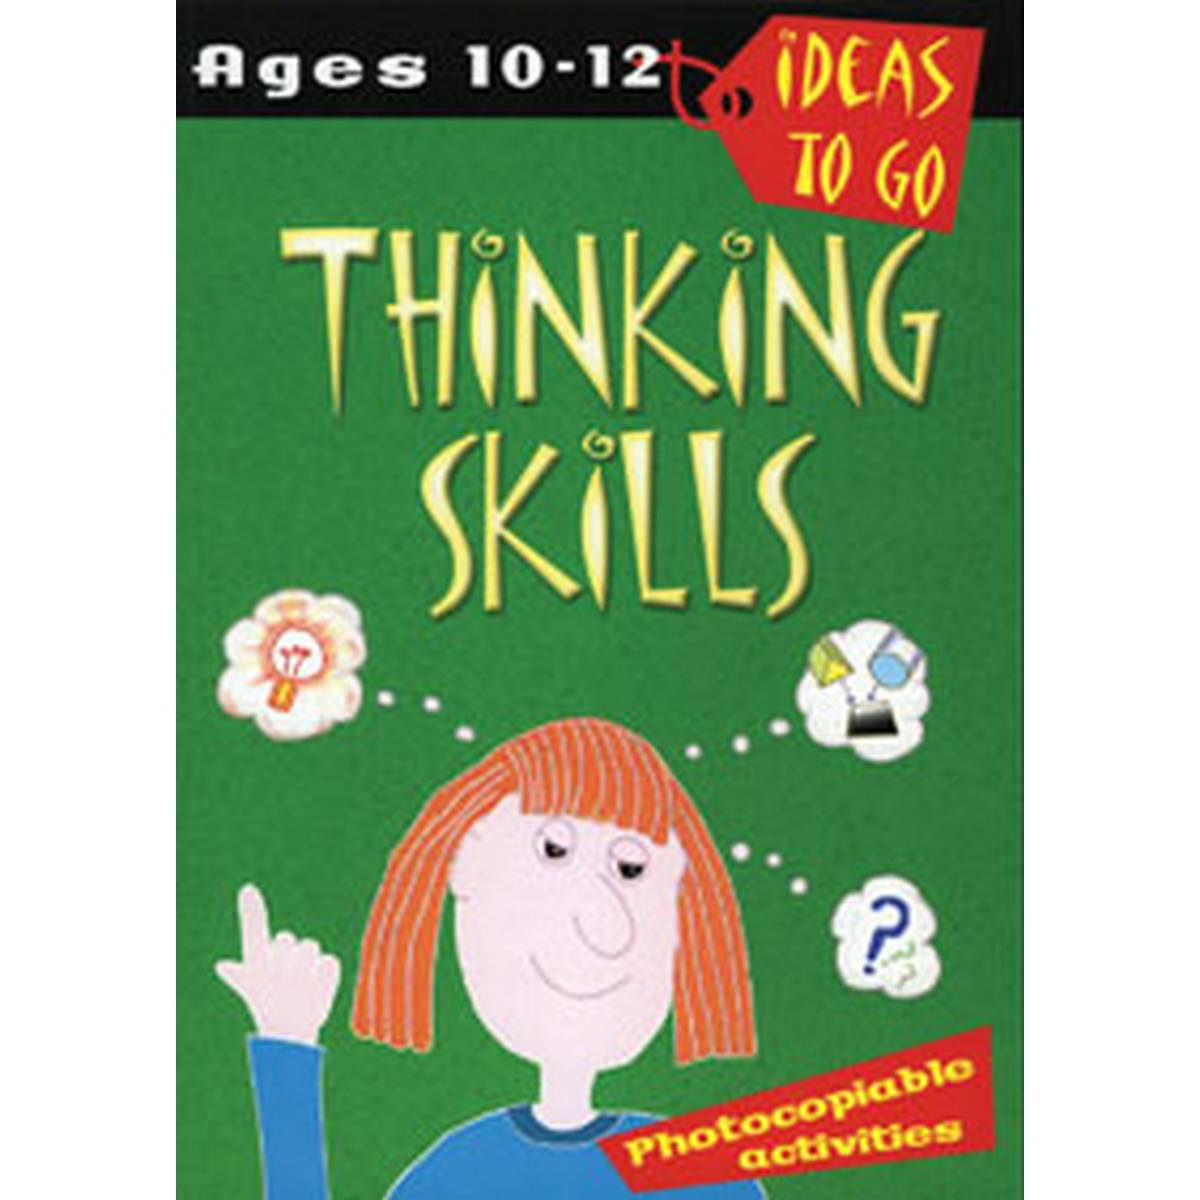 Thinking Skills Ages 10-12